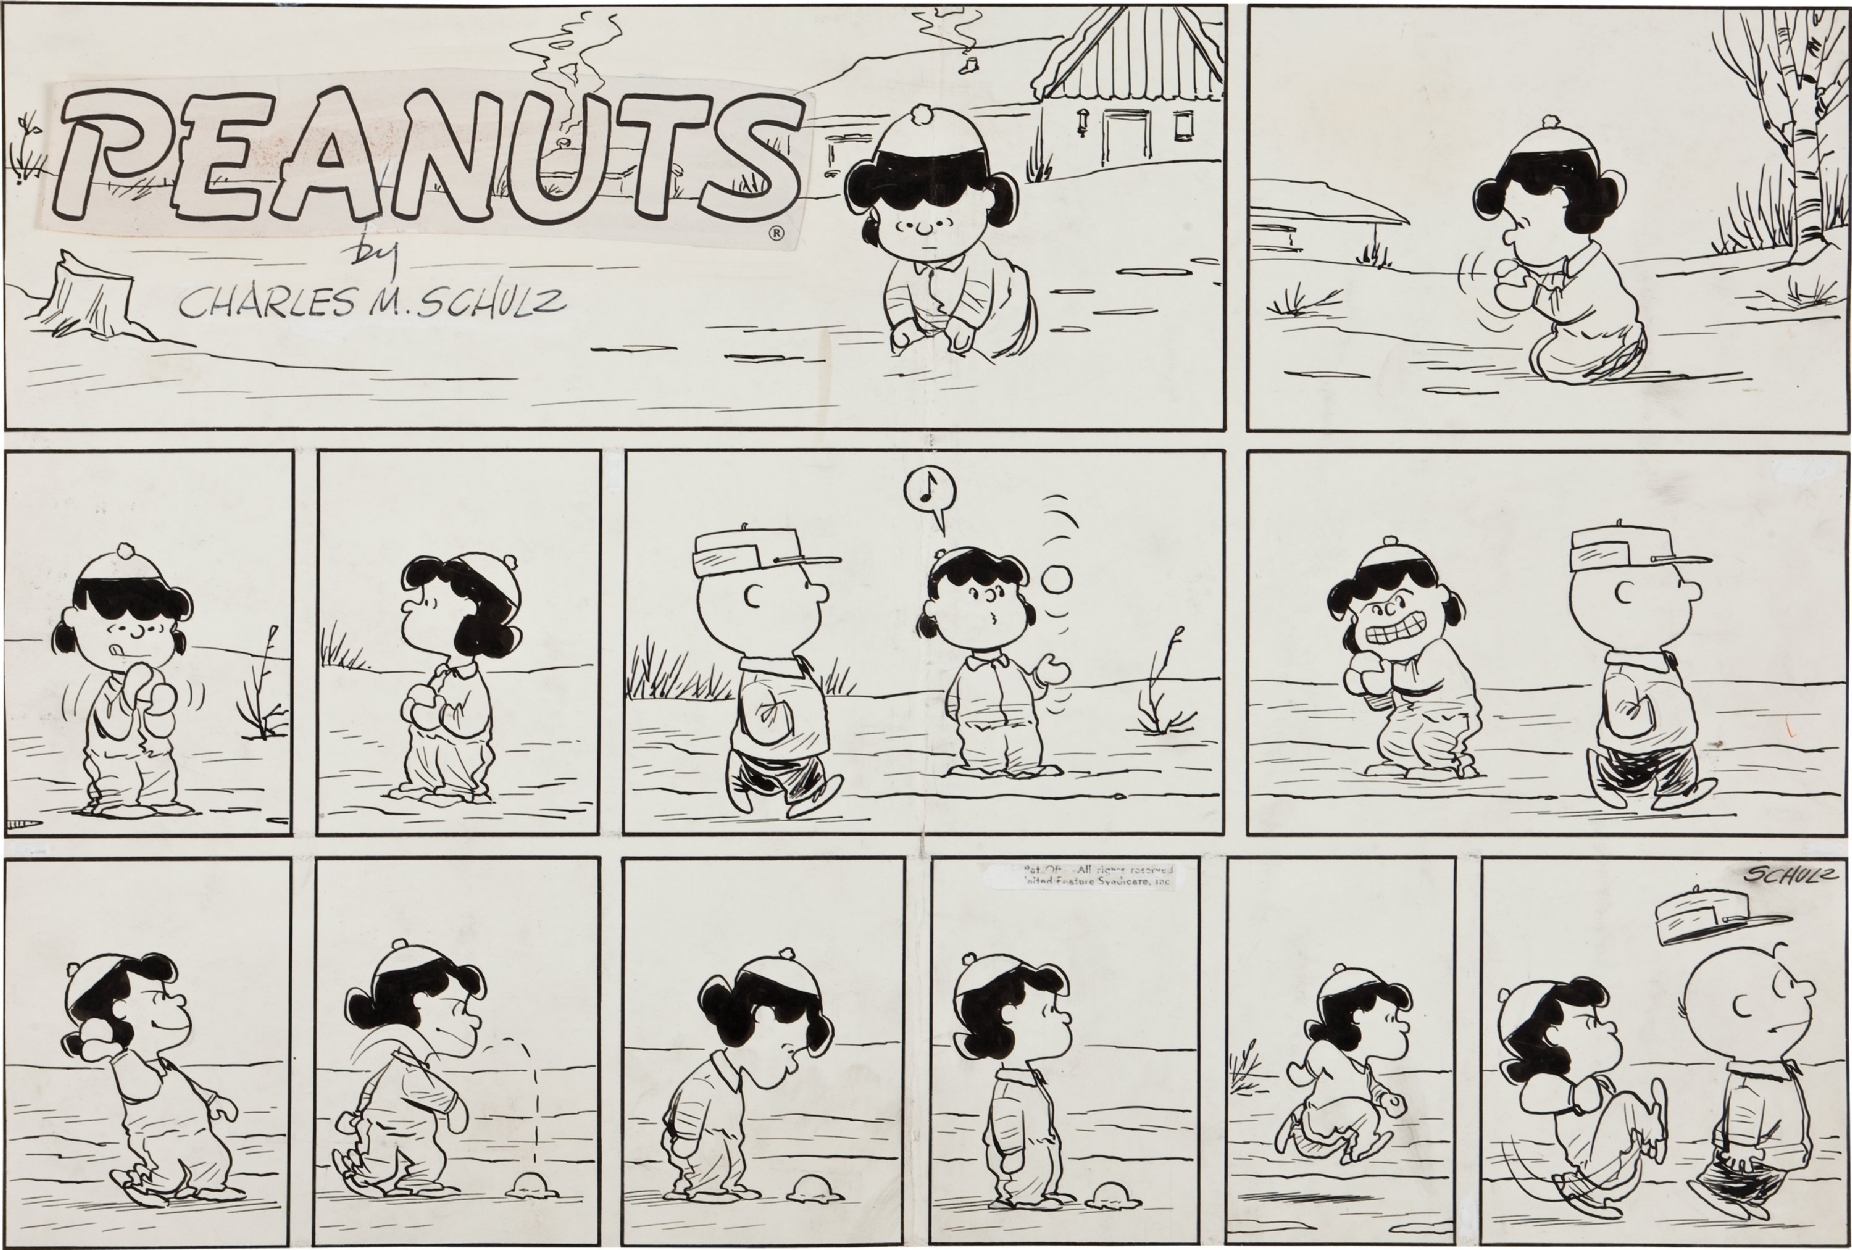 Charles Schulz--Peanuts --1959 wordless vintage Sunday par Charles M